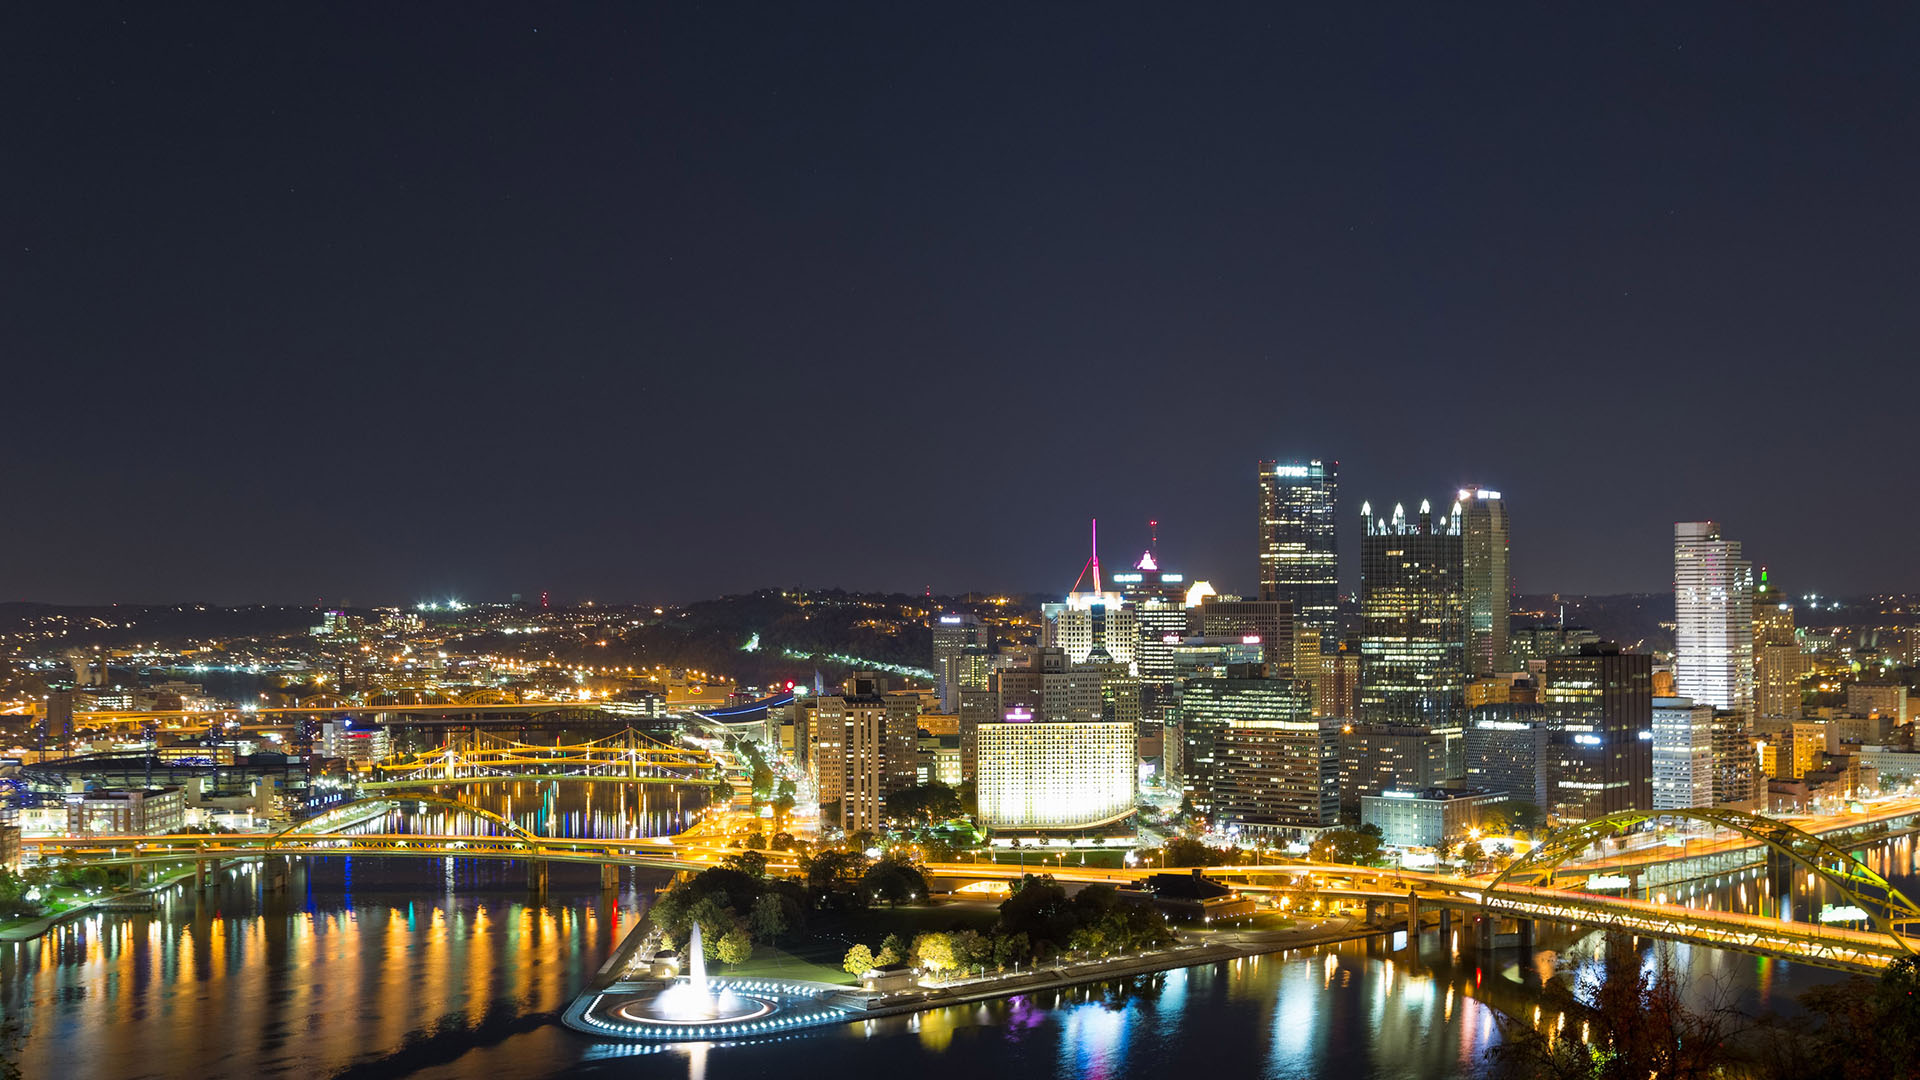 Pittsburgh nightime nightlife live wallpaper of sky scrapers and bridges